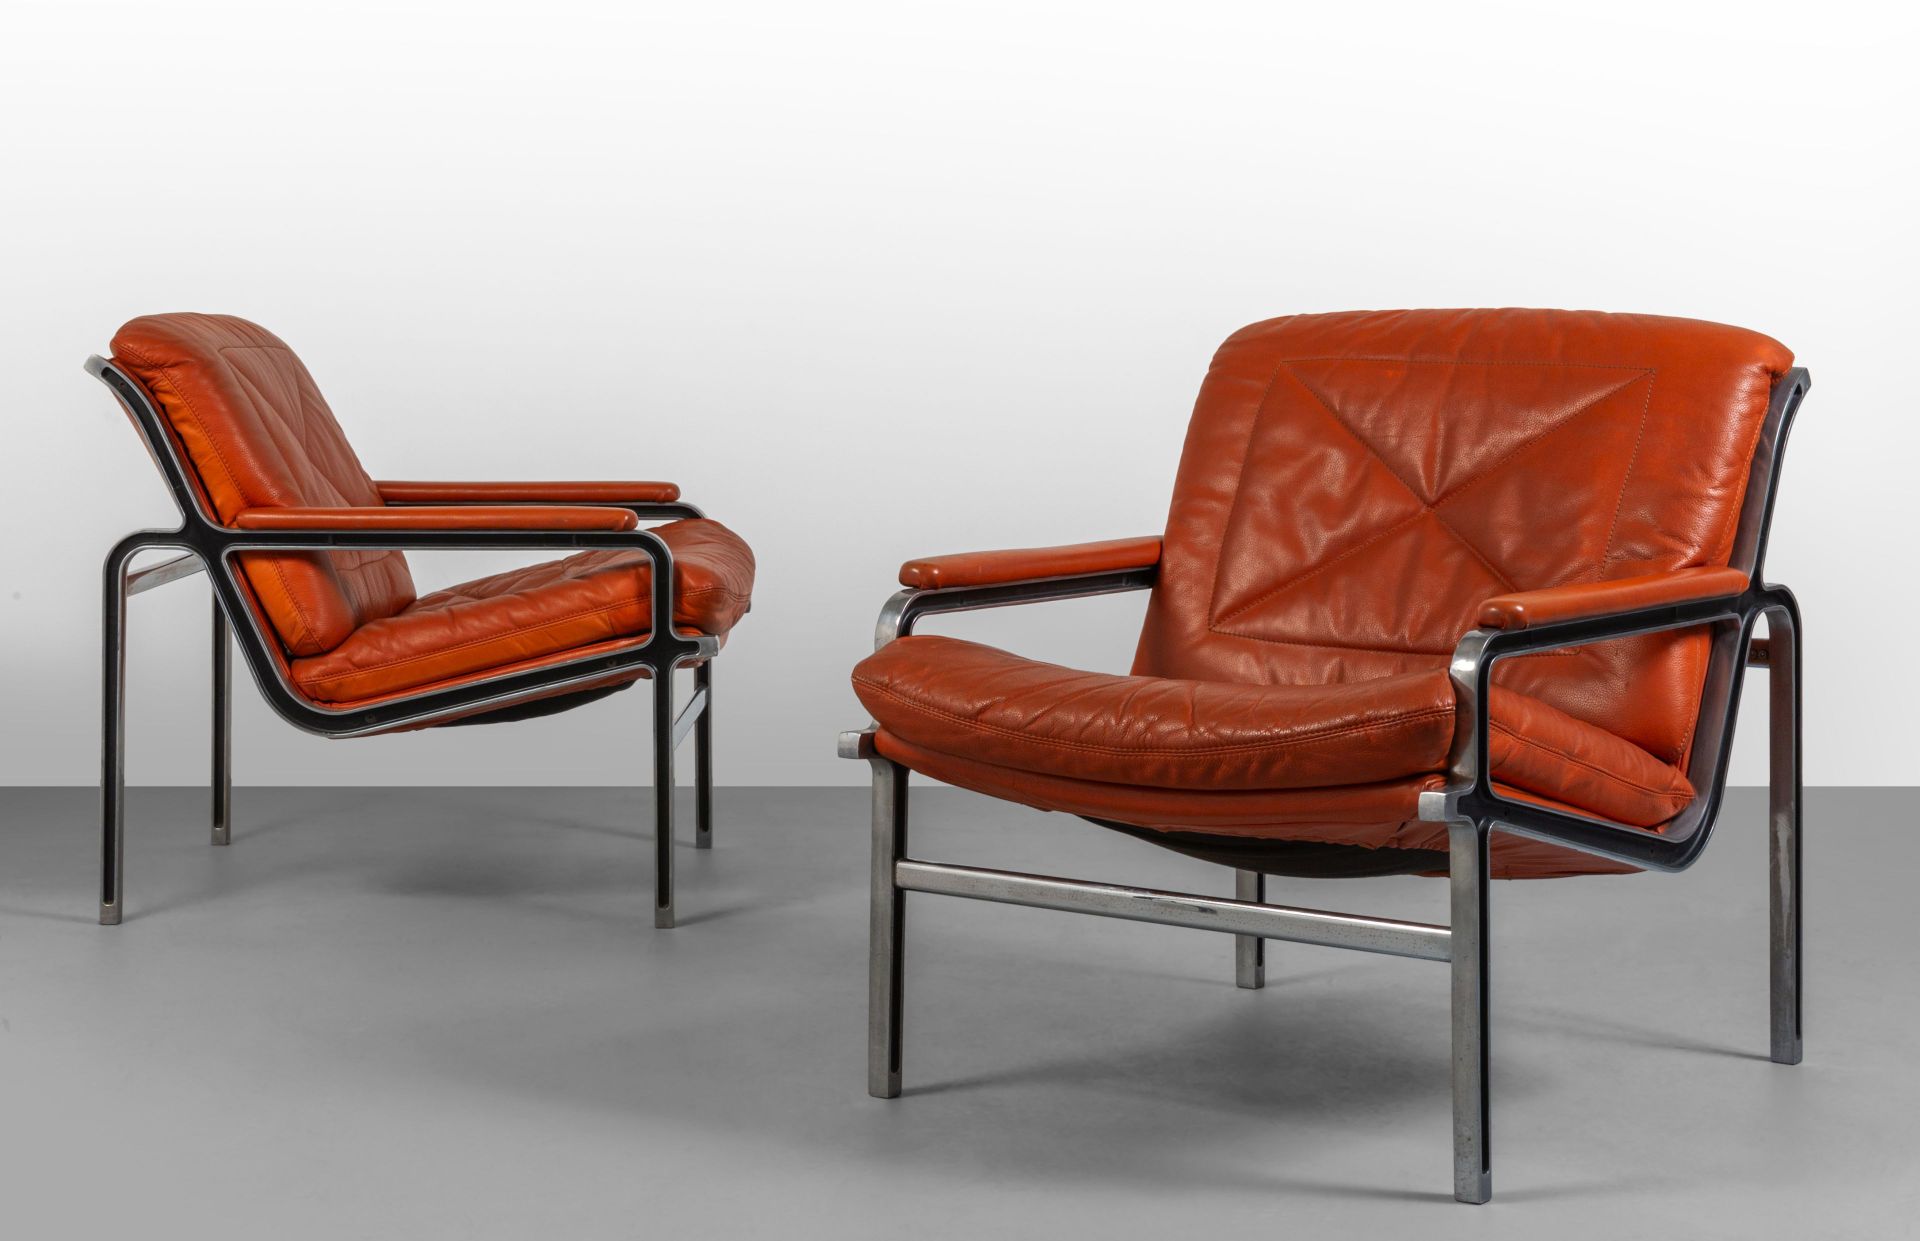 VANDENBEUCK ANDRE ANDRE' VANDENBEUCK STRASSLE INTERNATIONAL 1960s.
Deux fauteuil&hellip;